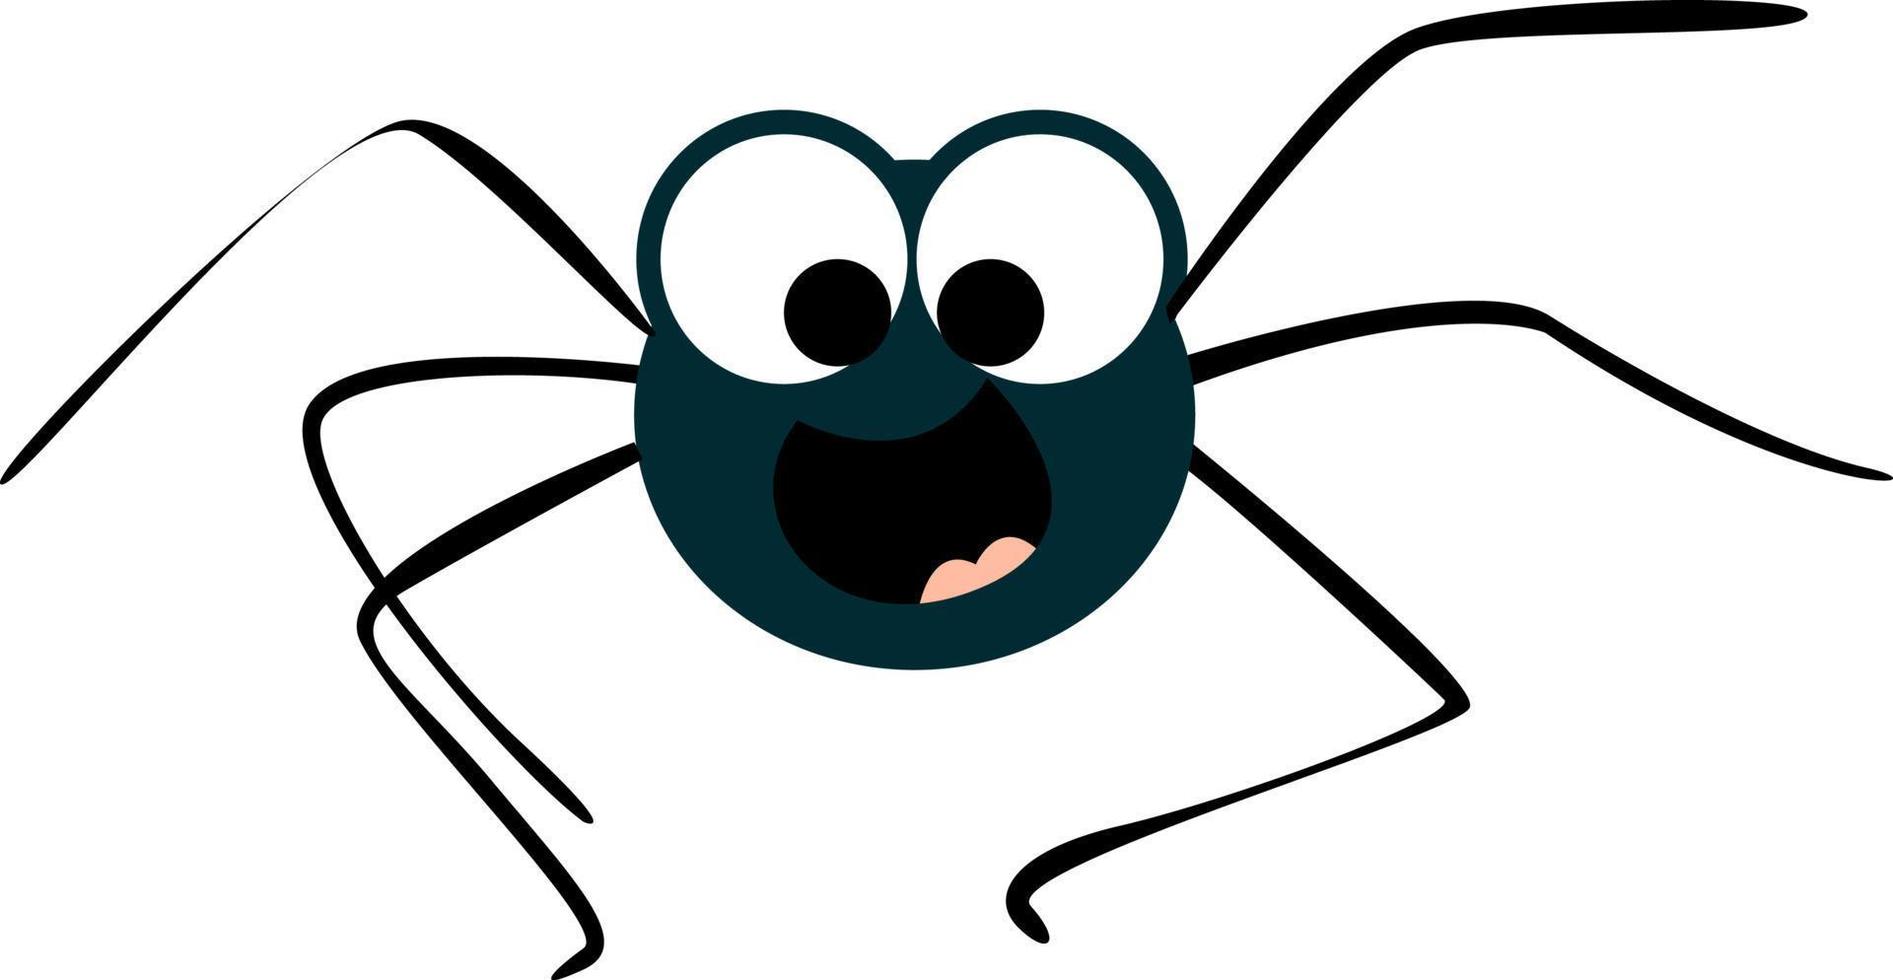 Happy spider, illustration, vector on white background.